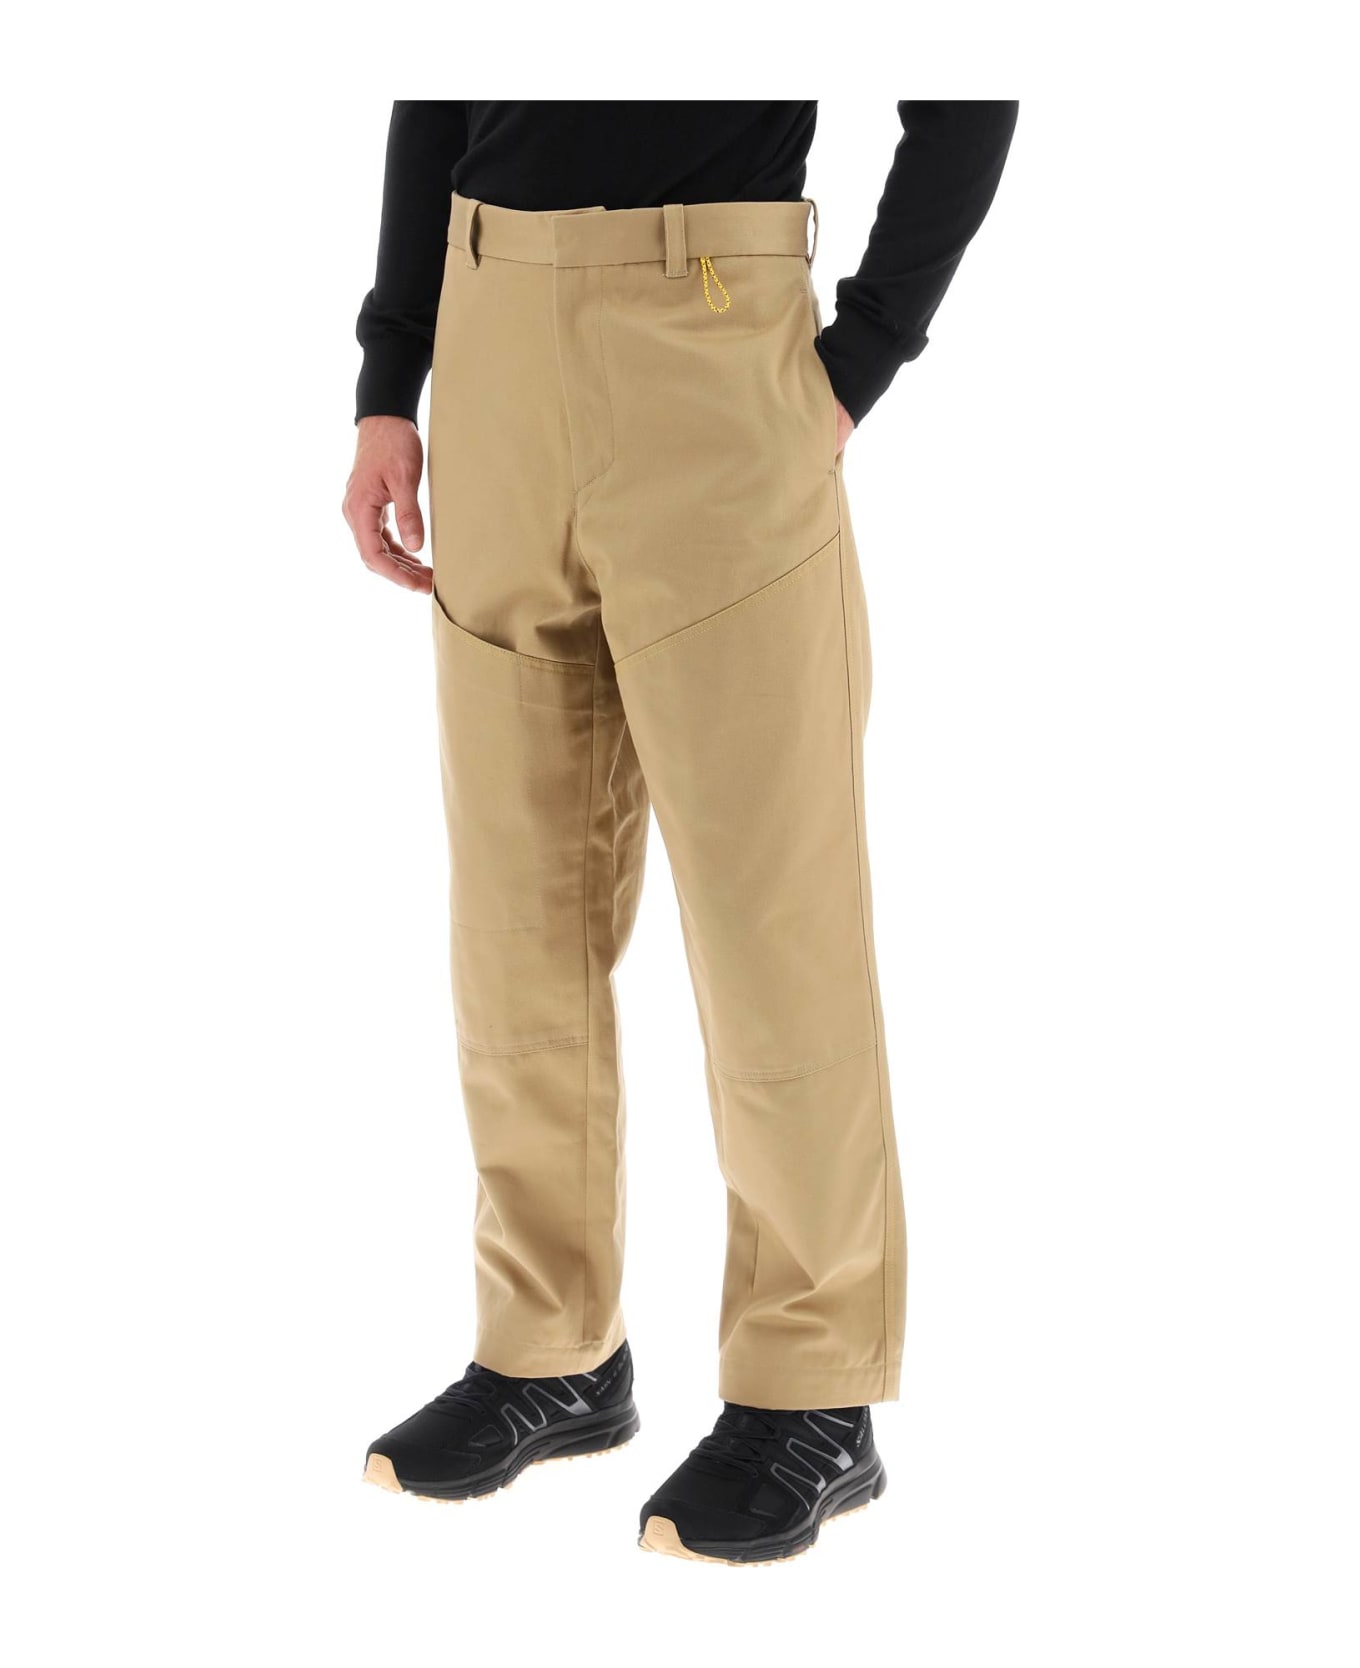 OAMC Straight Cotton Pants - BEIGE (Beige)